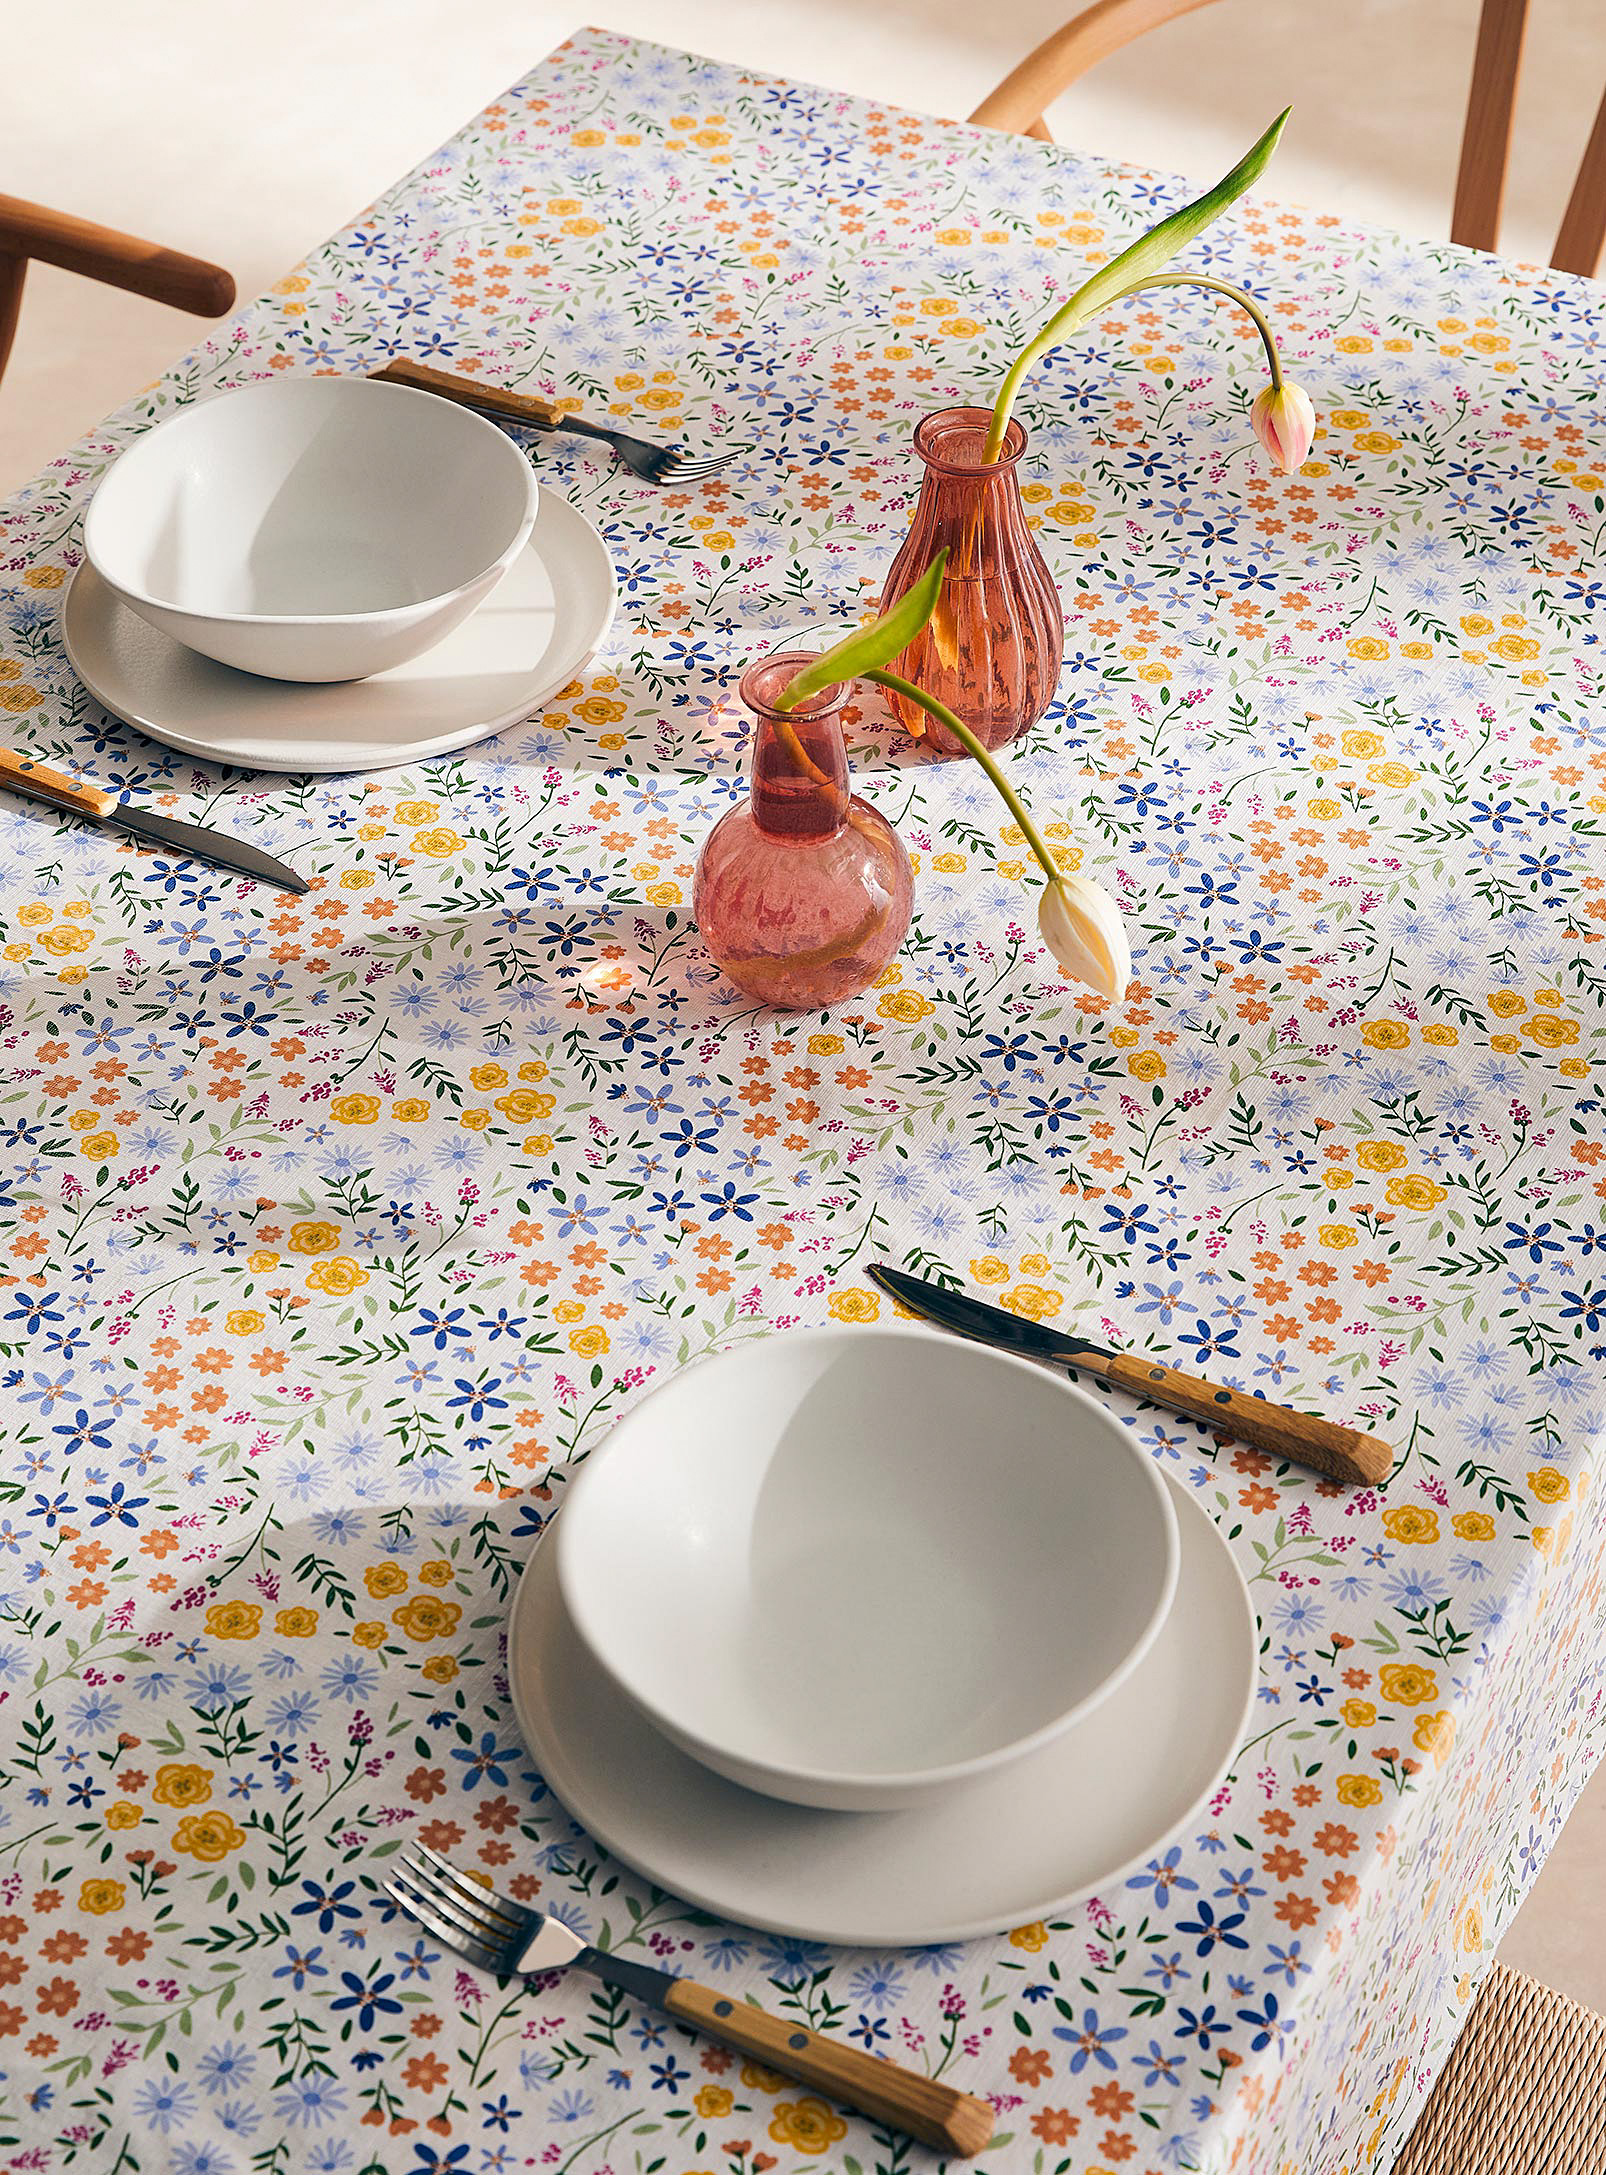 Simons Maison - Countryside flowers vinyl tablecloth